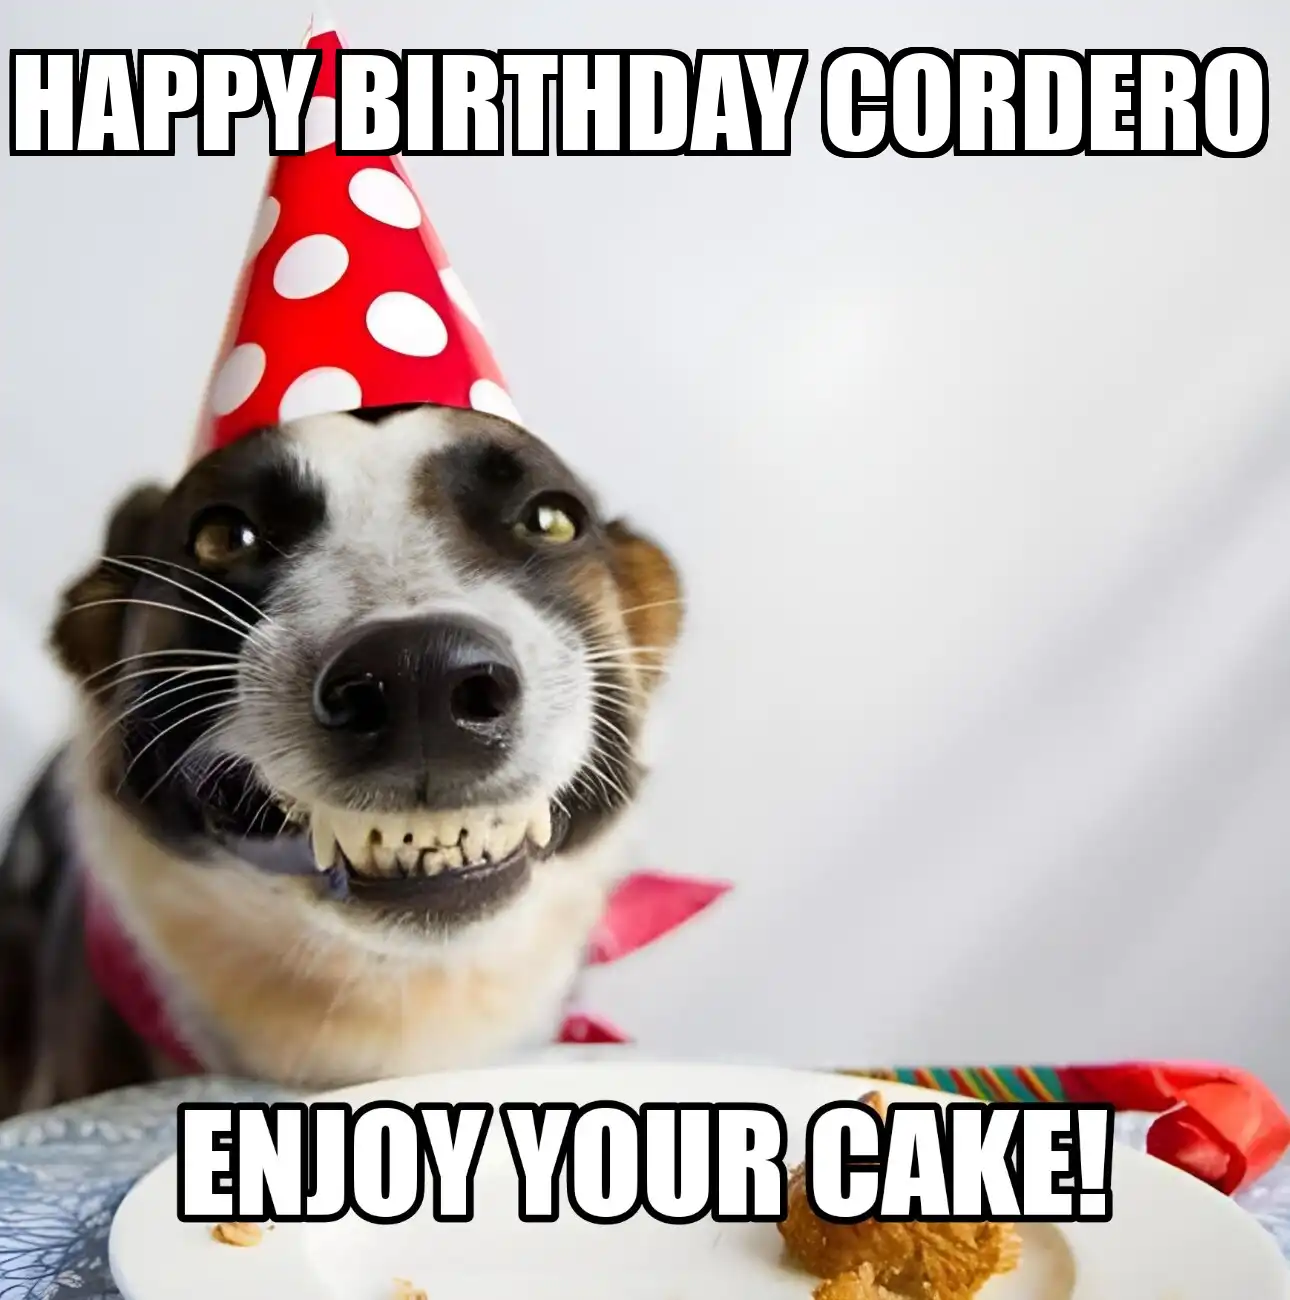 Happy Birthday Cordero Enjoy Your Cake Dog Meme